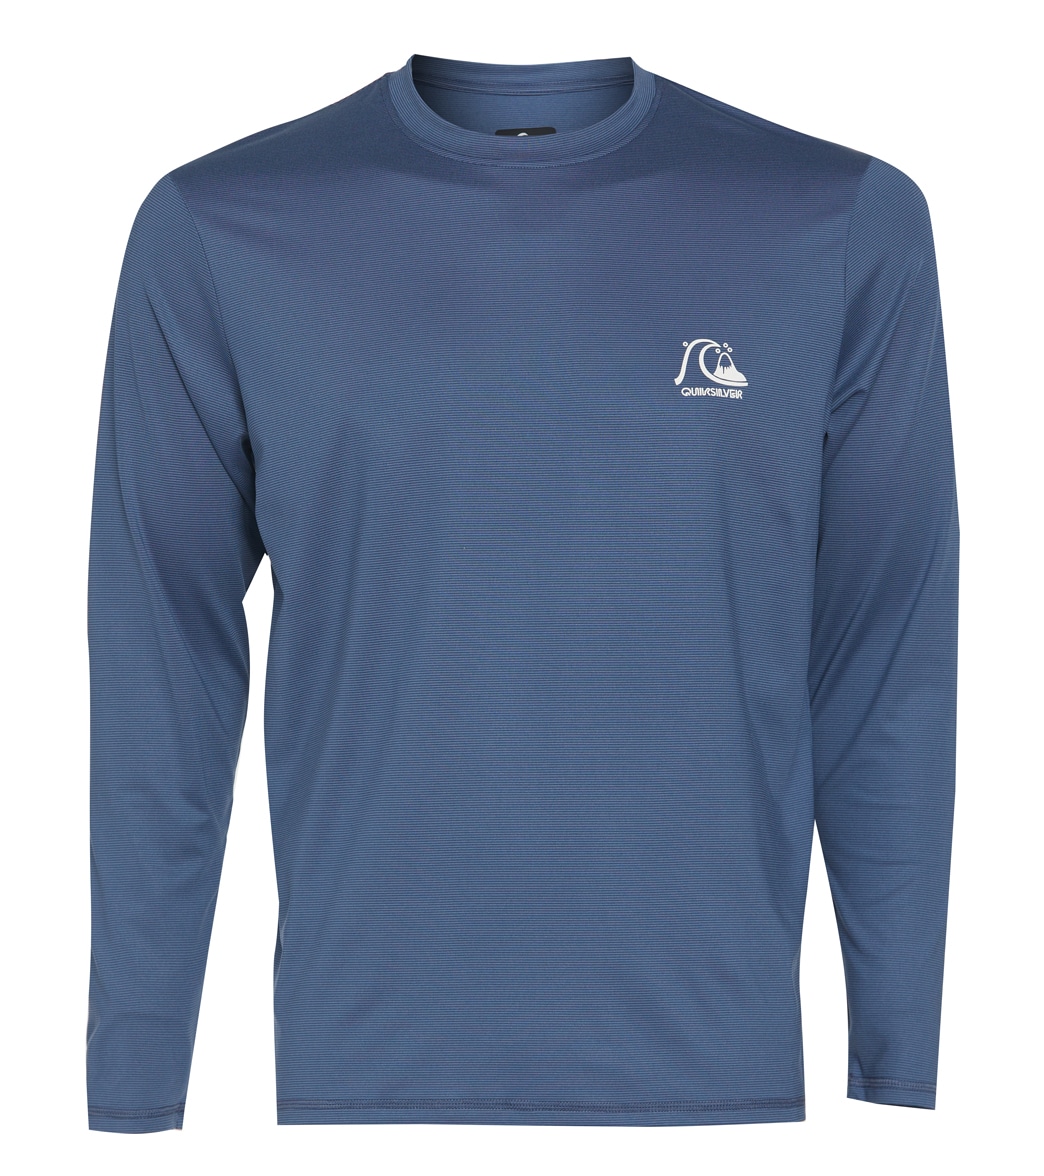 Quiksilver Men's Heritge Long Sleeve Upf 50 Surf Shirt - Insignia Blue Heathe Small Cotton/Polyester - Swimoutlet.com